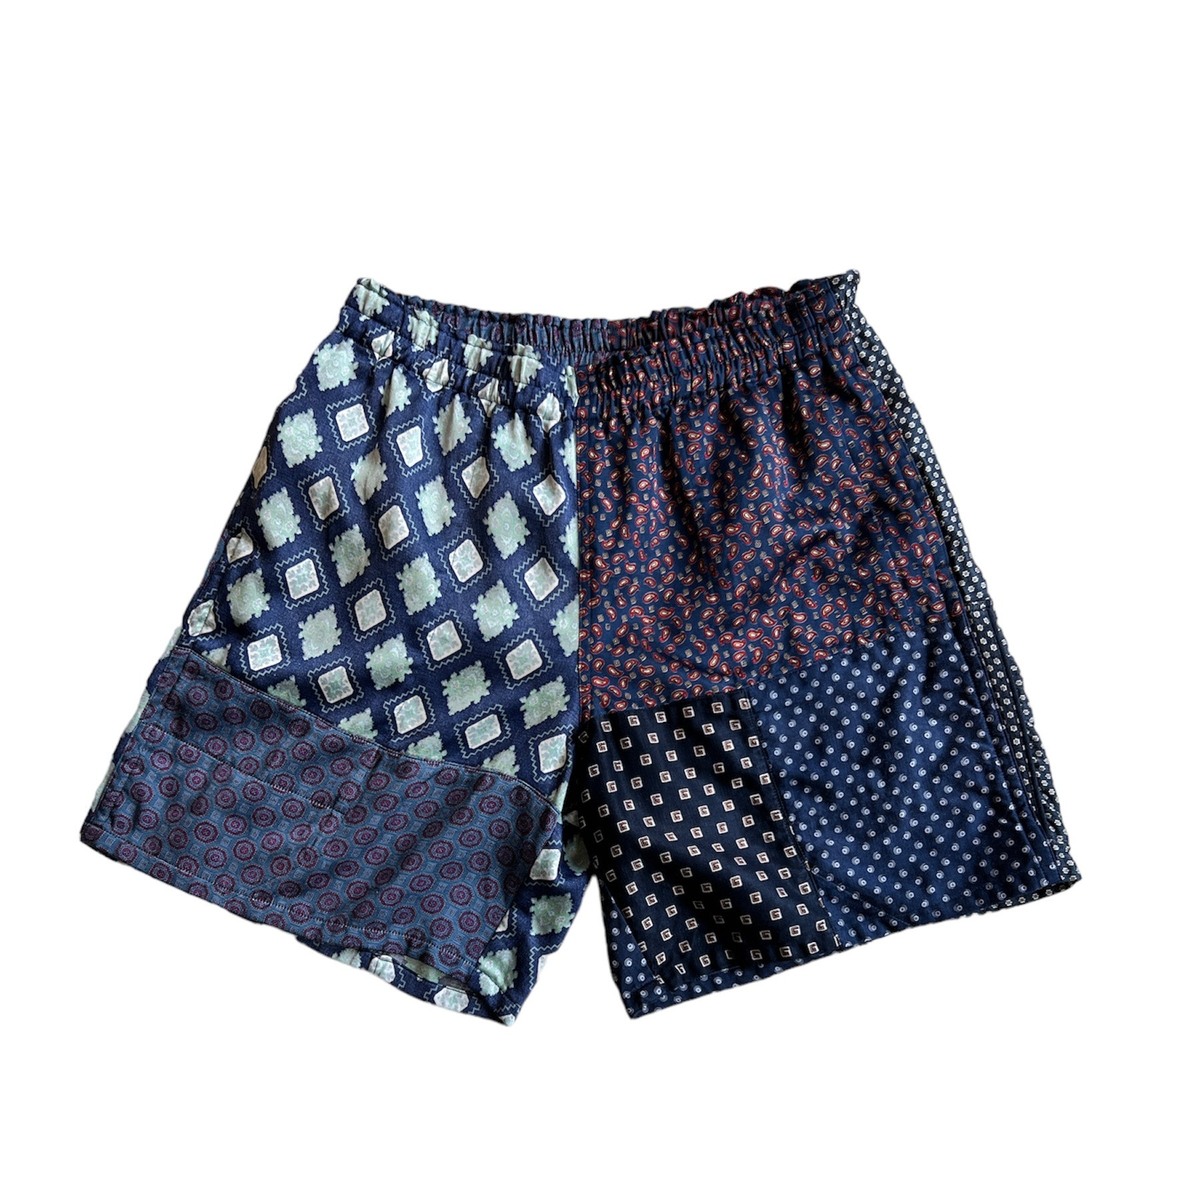 OLDPARK P.B shorts - 画像1枚目